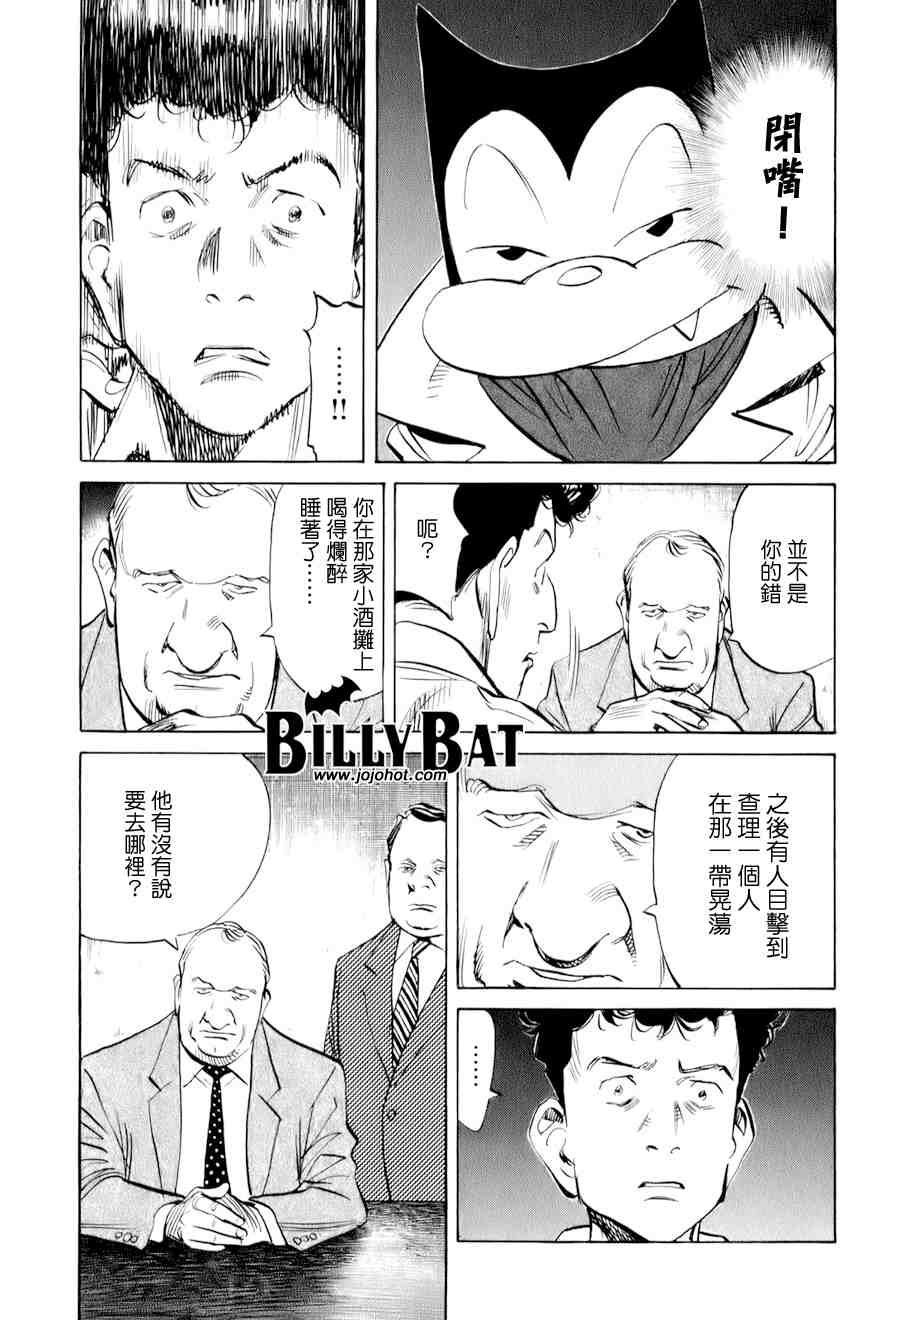 Billy_Bat - 第1卷(3/4) - 6